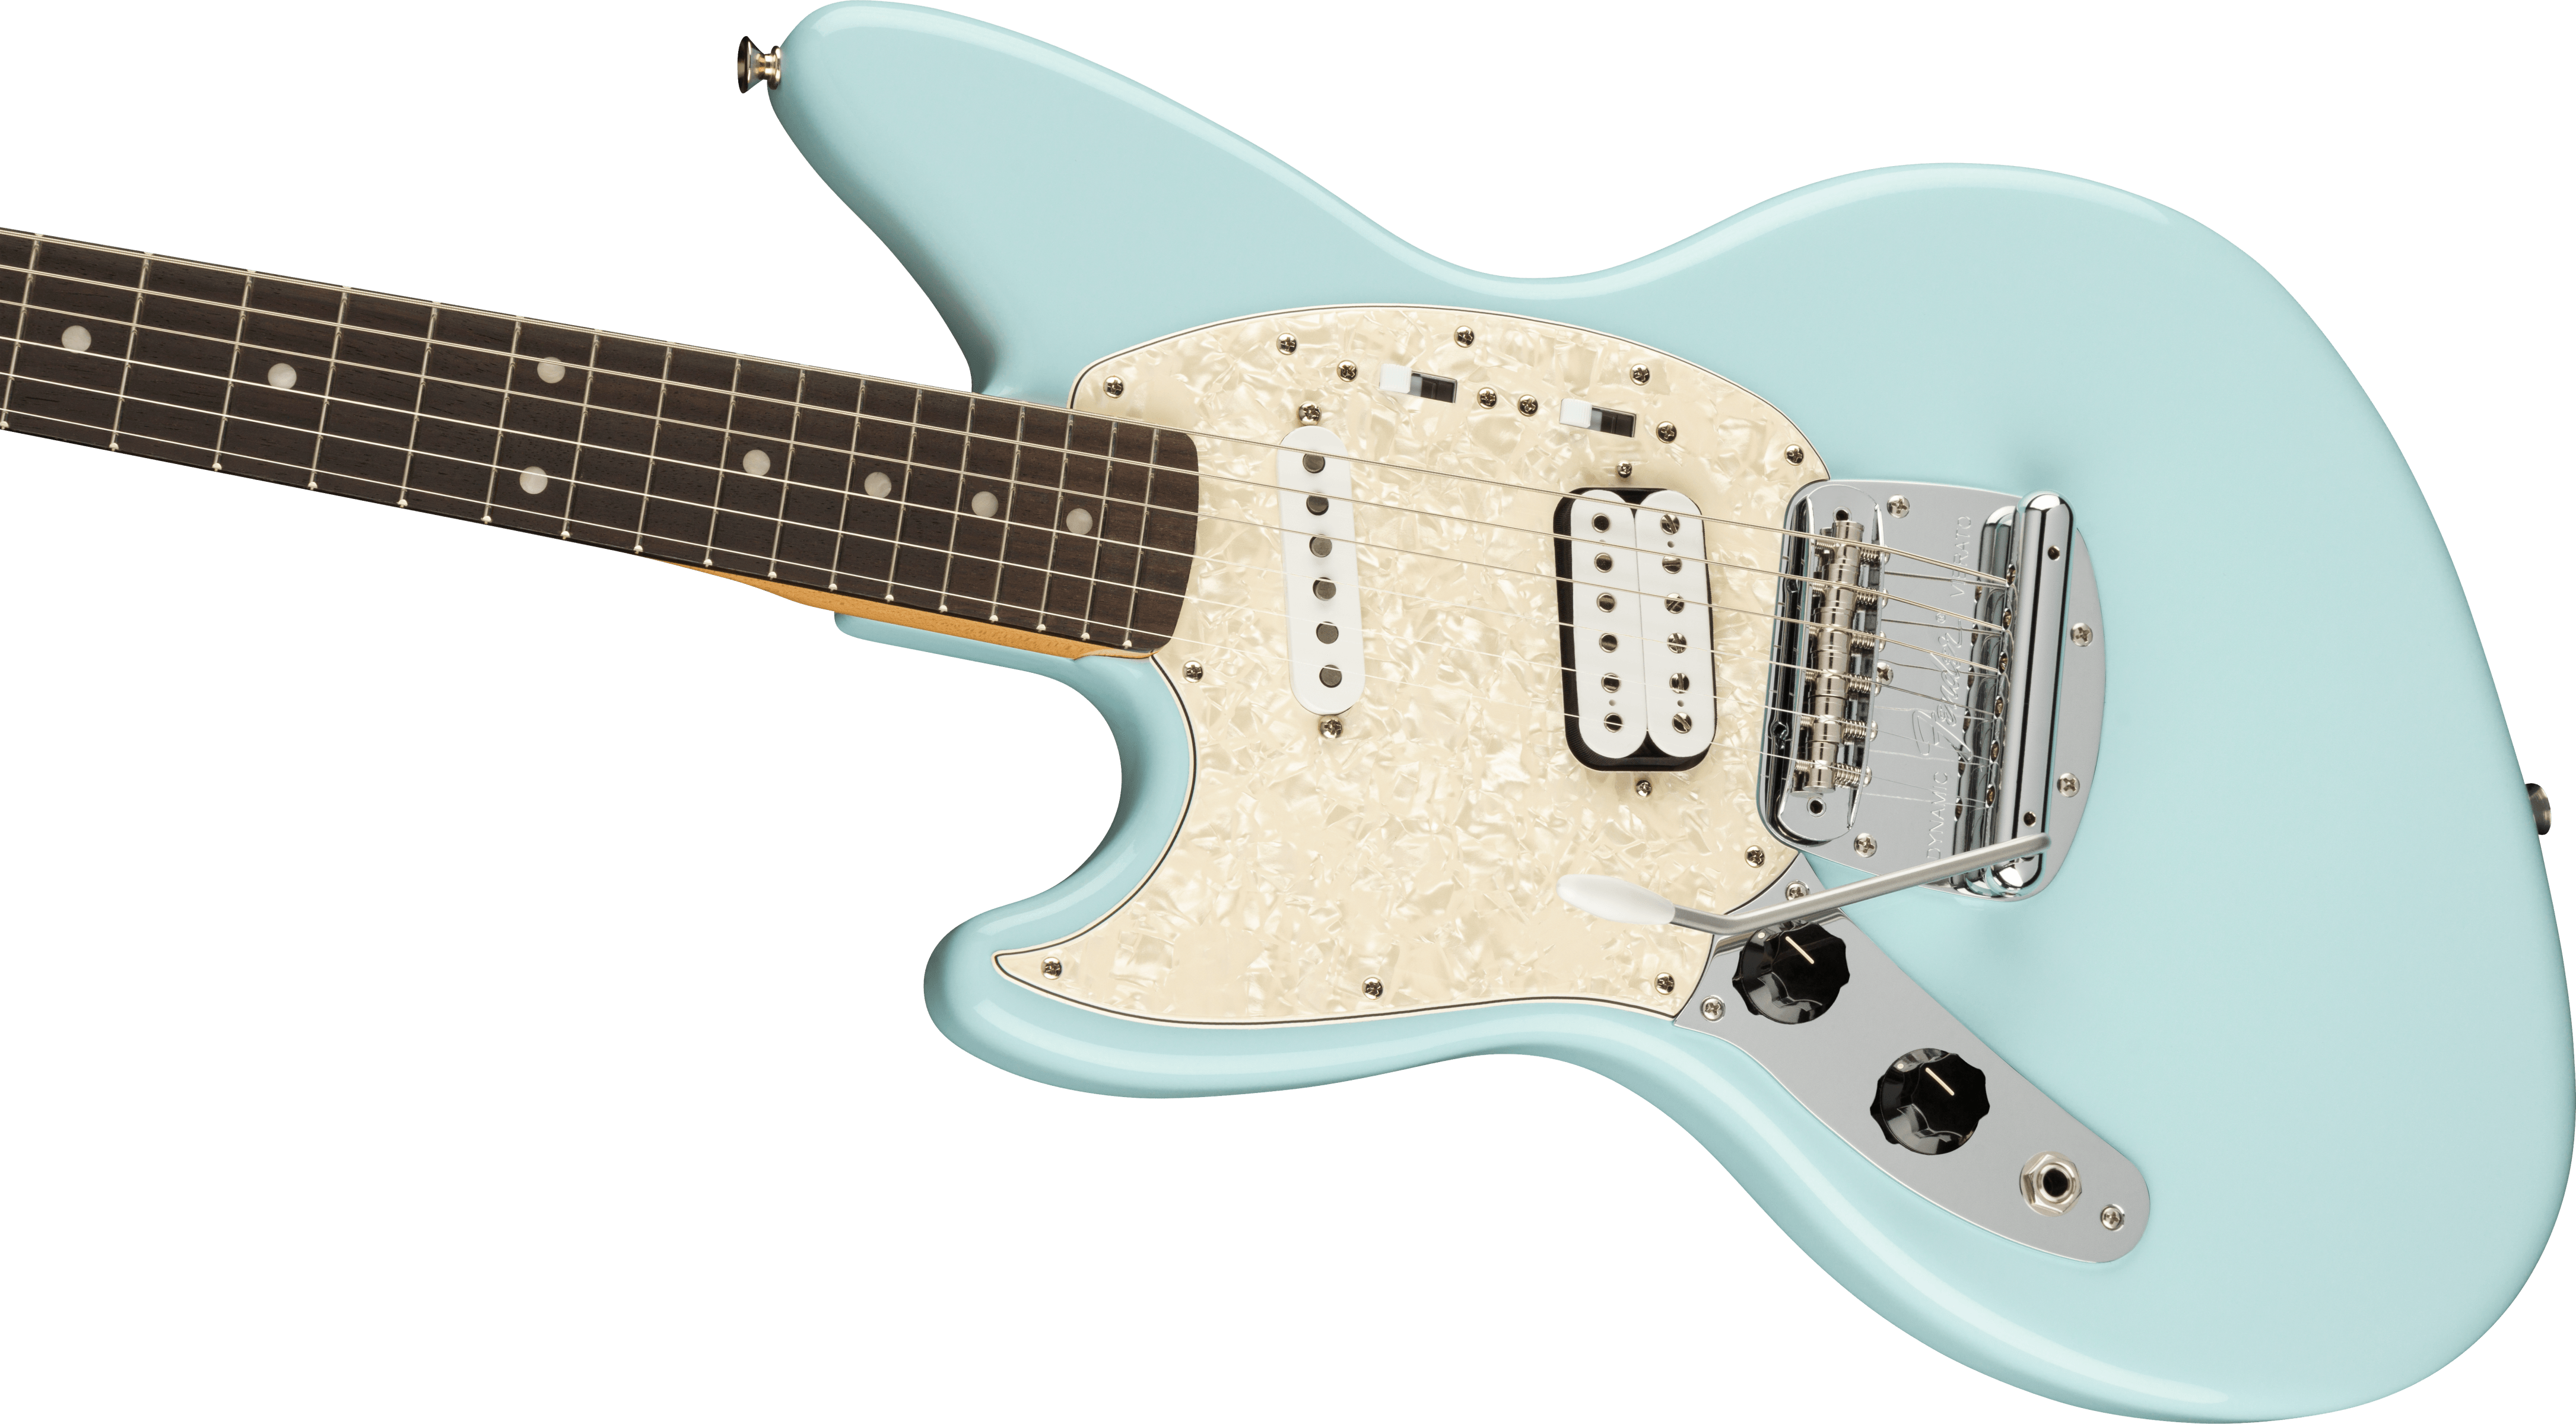 Fender Jag-stang Kurt Cobain Artist Gaucher Hs Trem Rw - Sonic Blue - Left-handed electric guitar - Variation 3